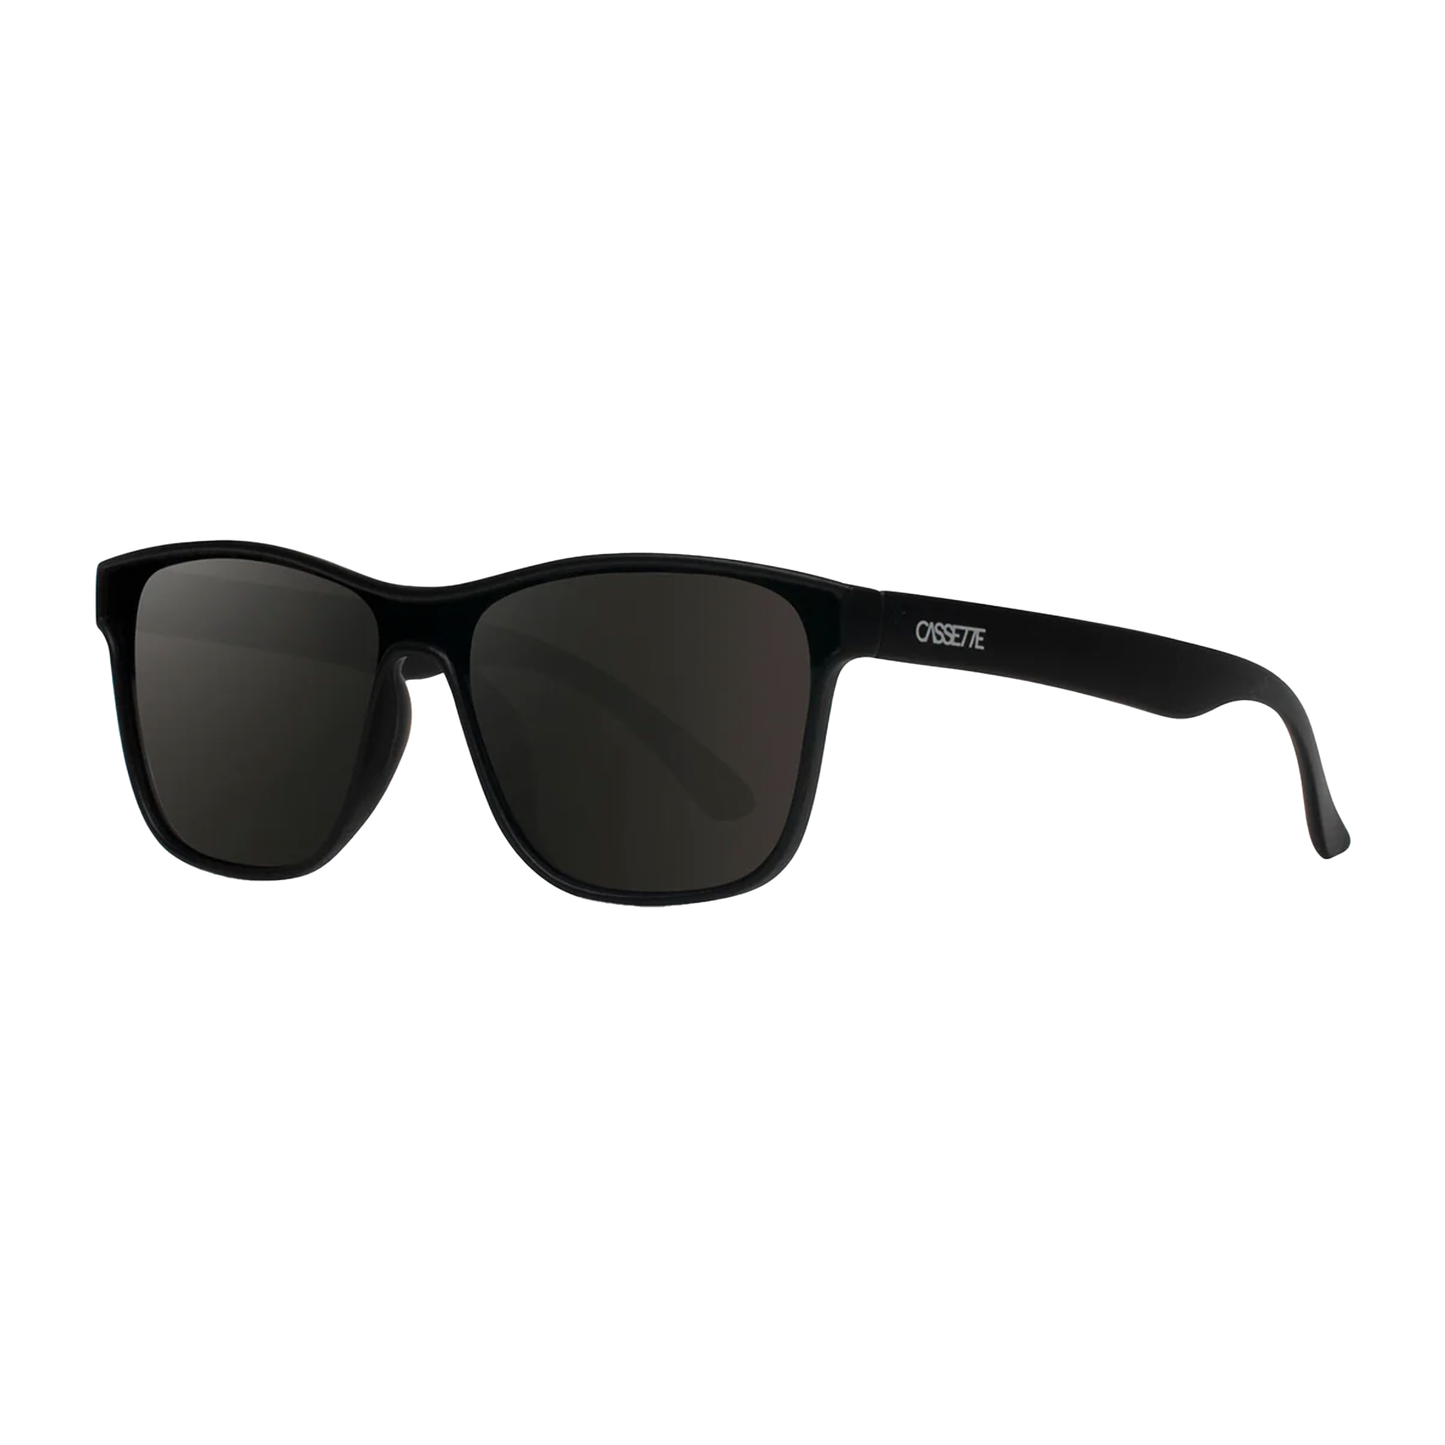 Cassette Futuro Sunglasses - Matte Black / Smoke Lens